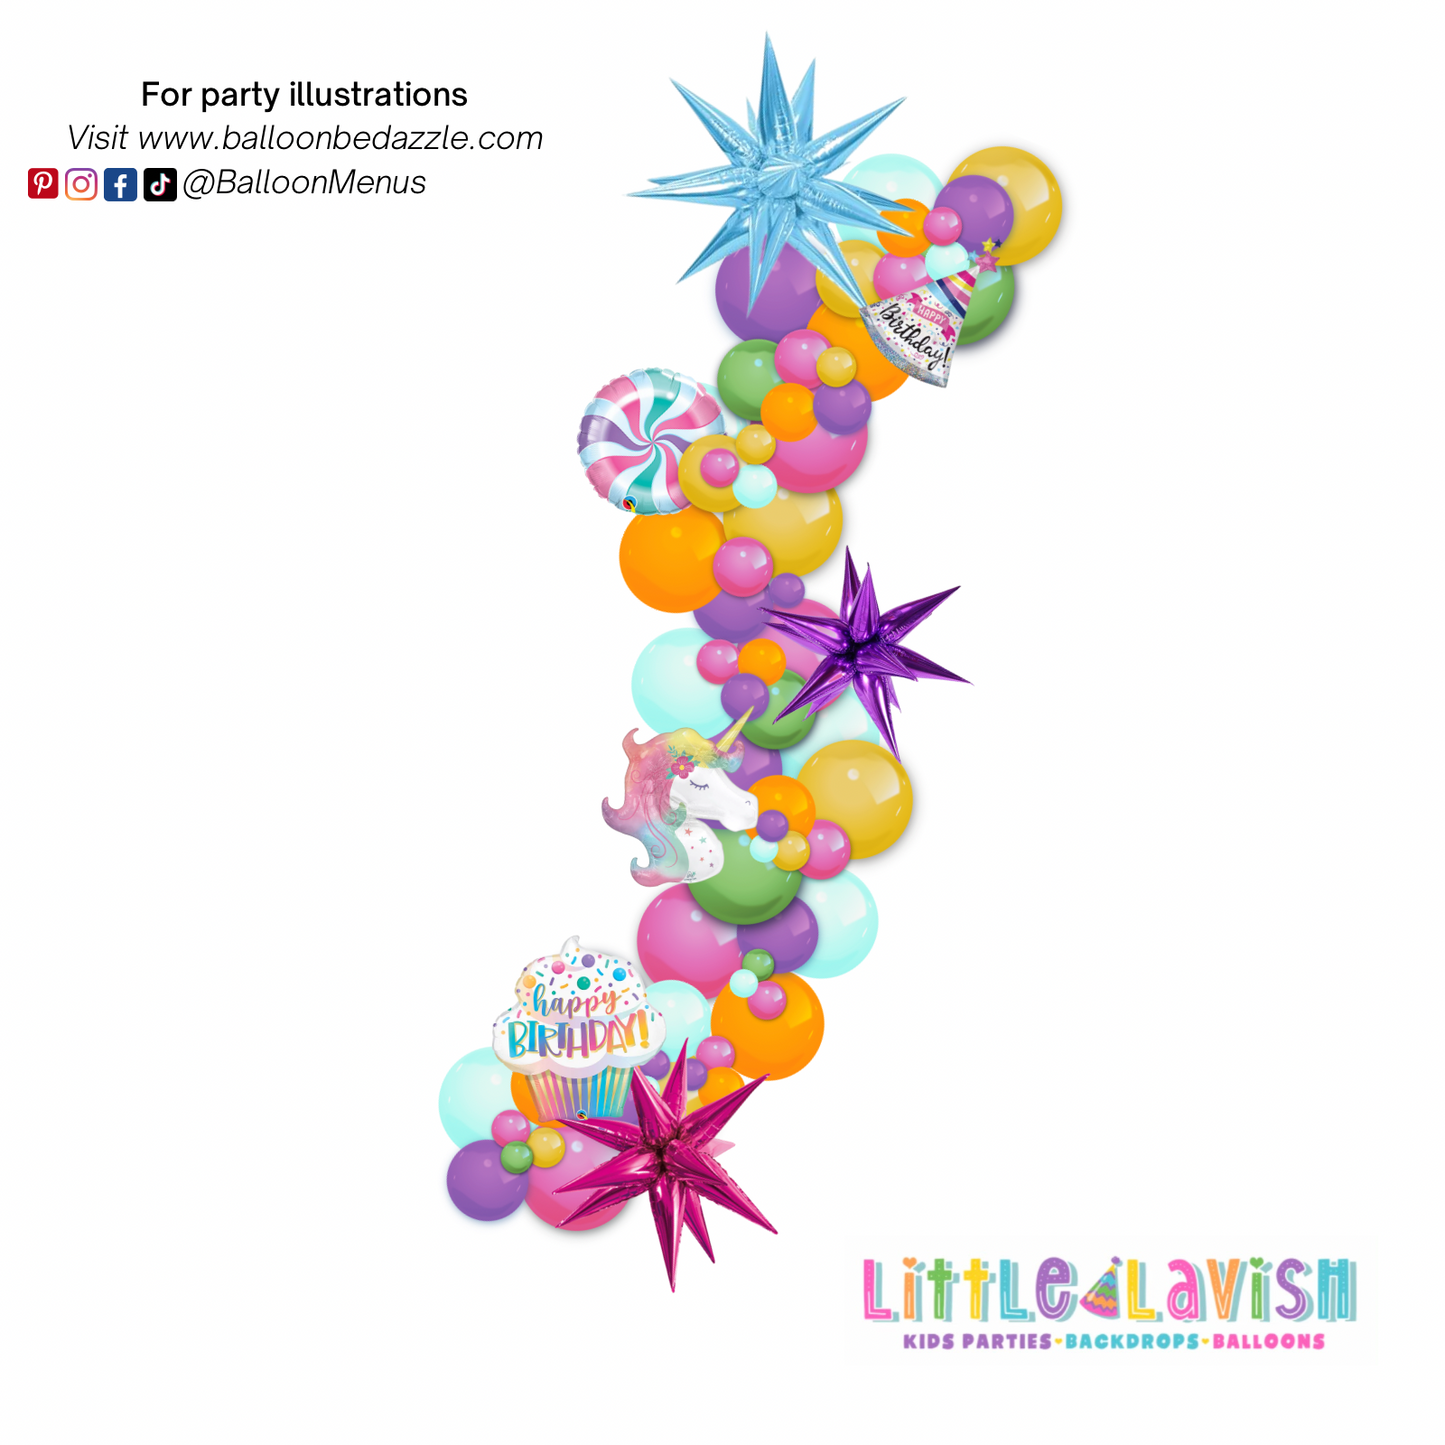 Little Lavish (Large Individual Party Illustrations)- Client Balloon Menu